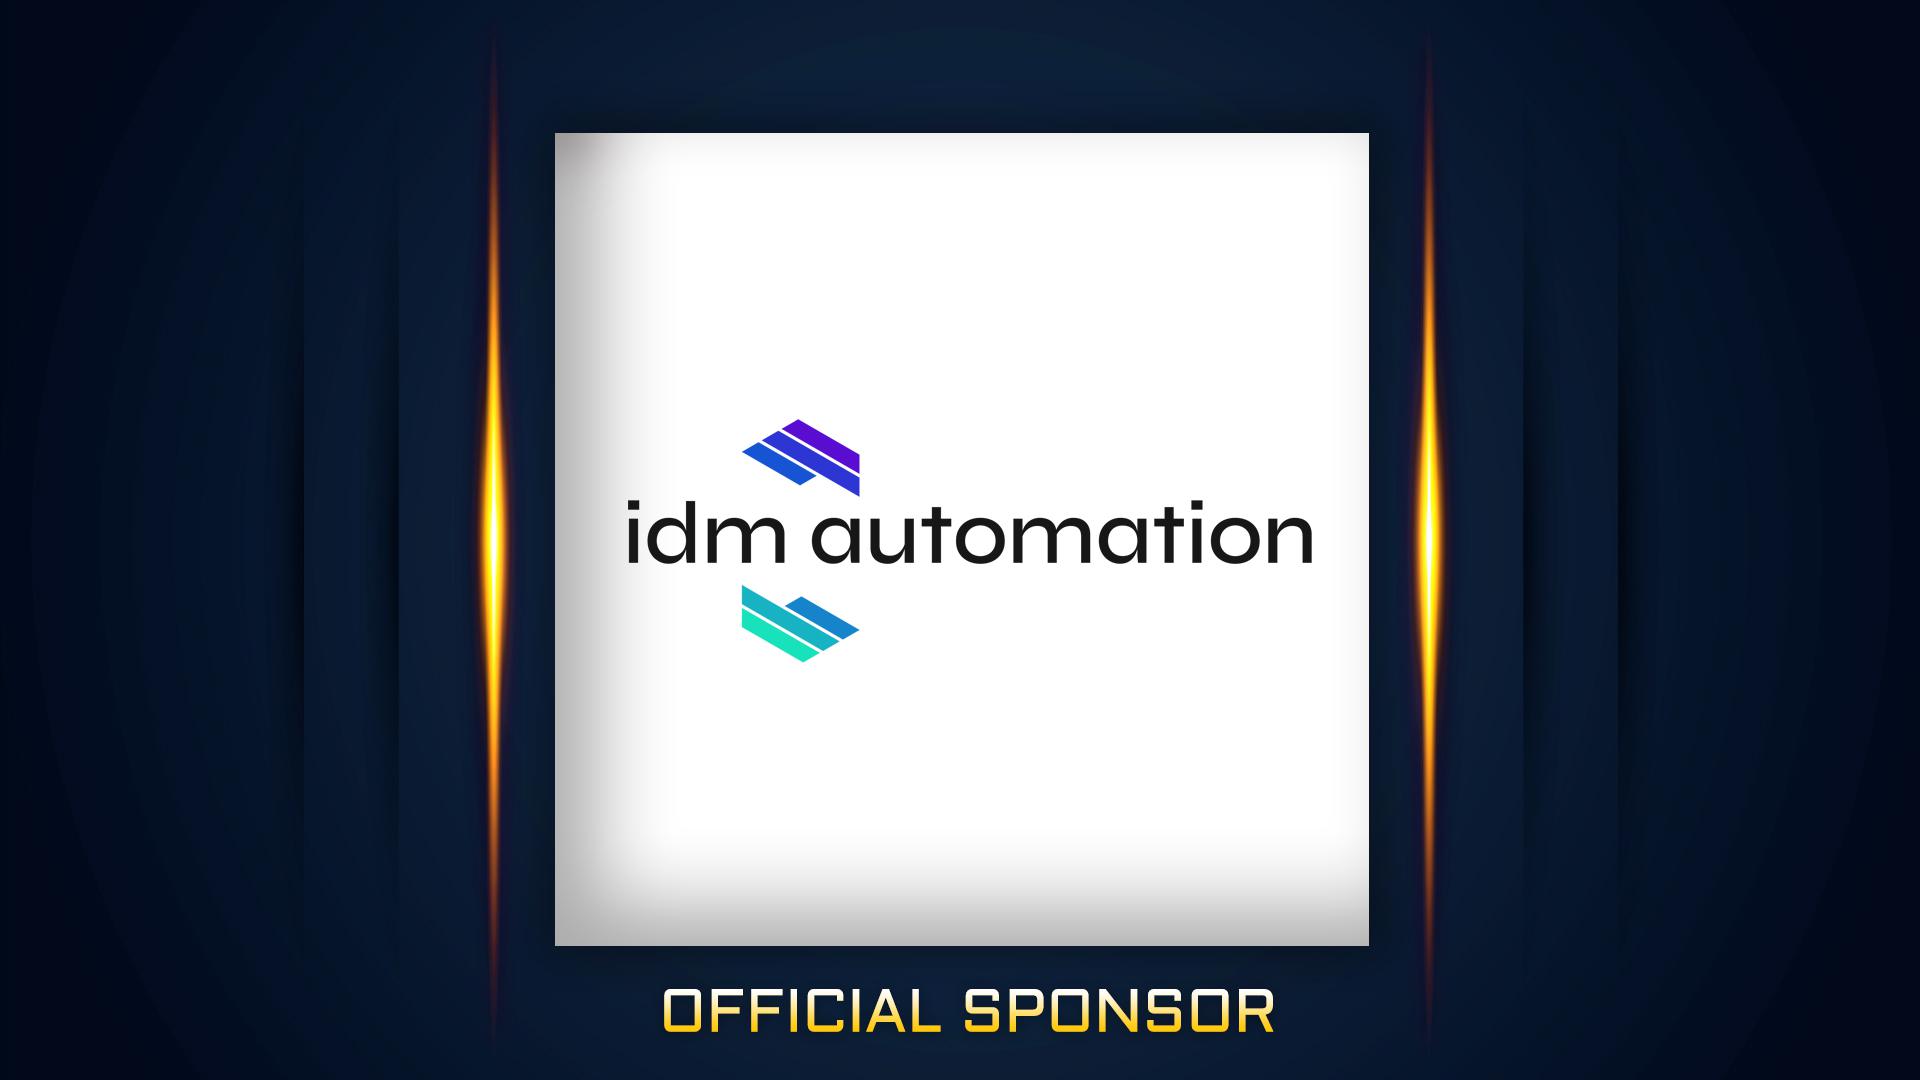 IDM Automation